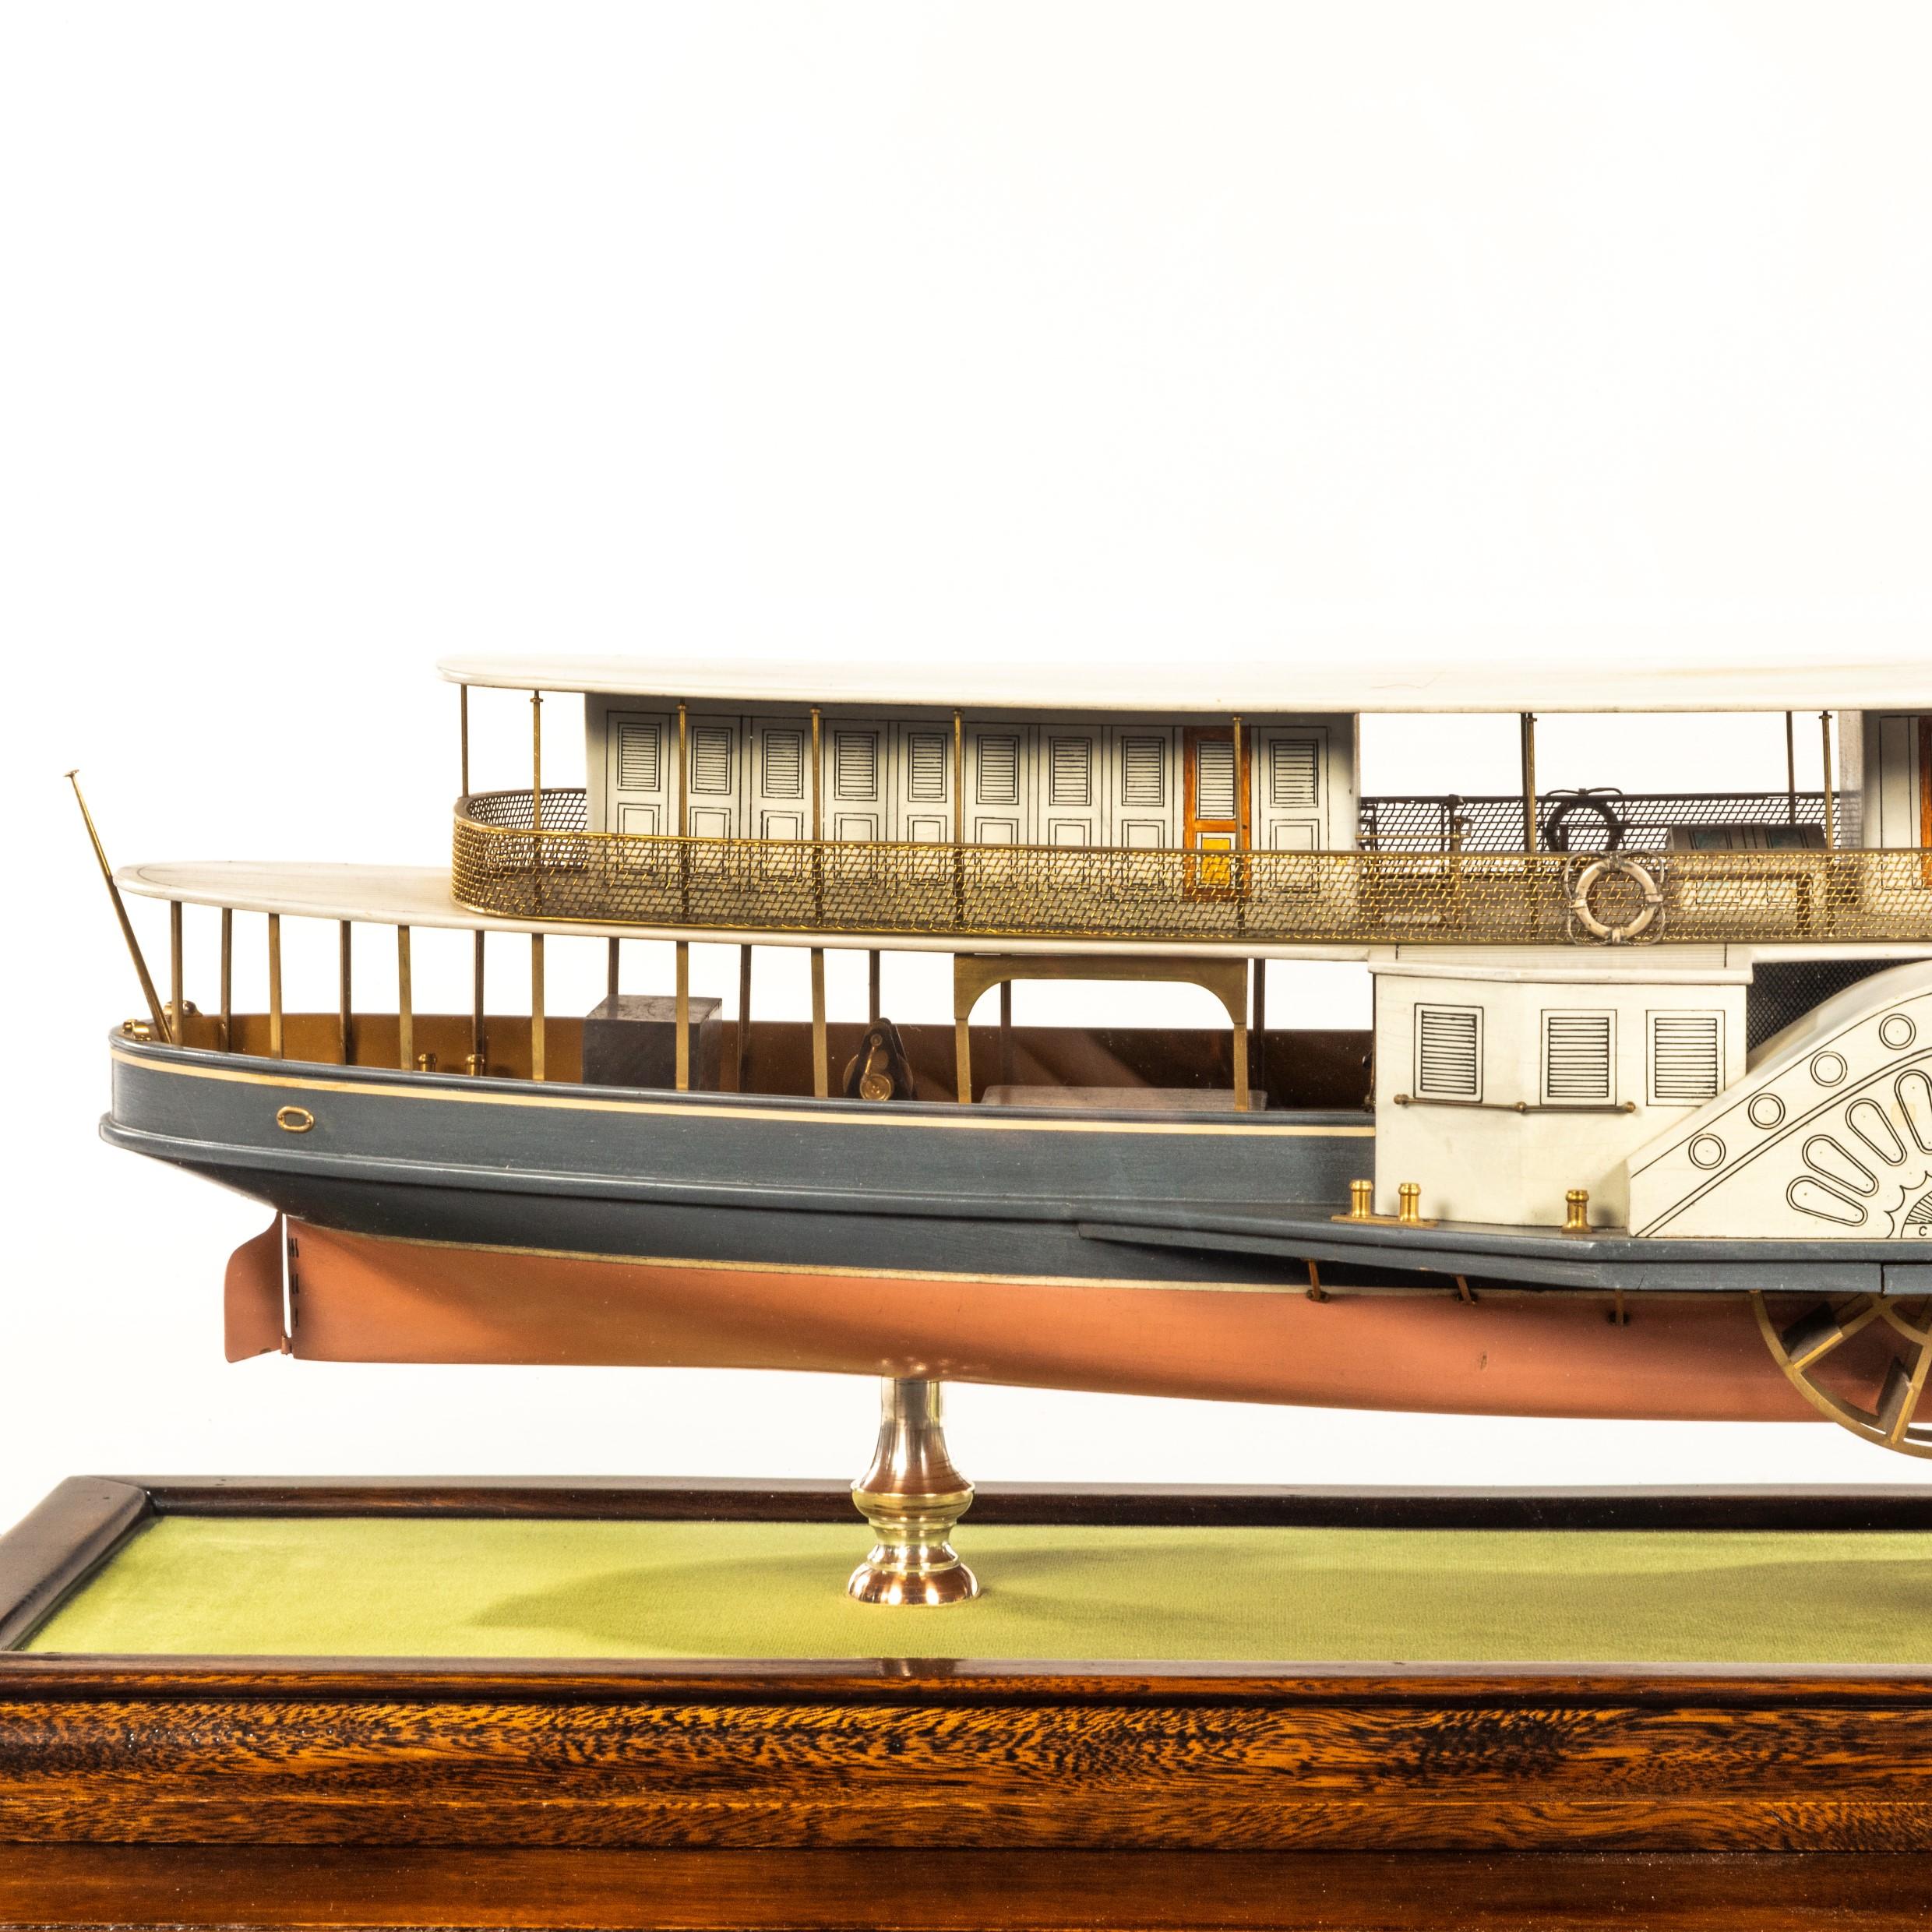 Builder’s Model of the Brazilian Passenger Paddle Steamer Caxias For Sale 3